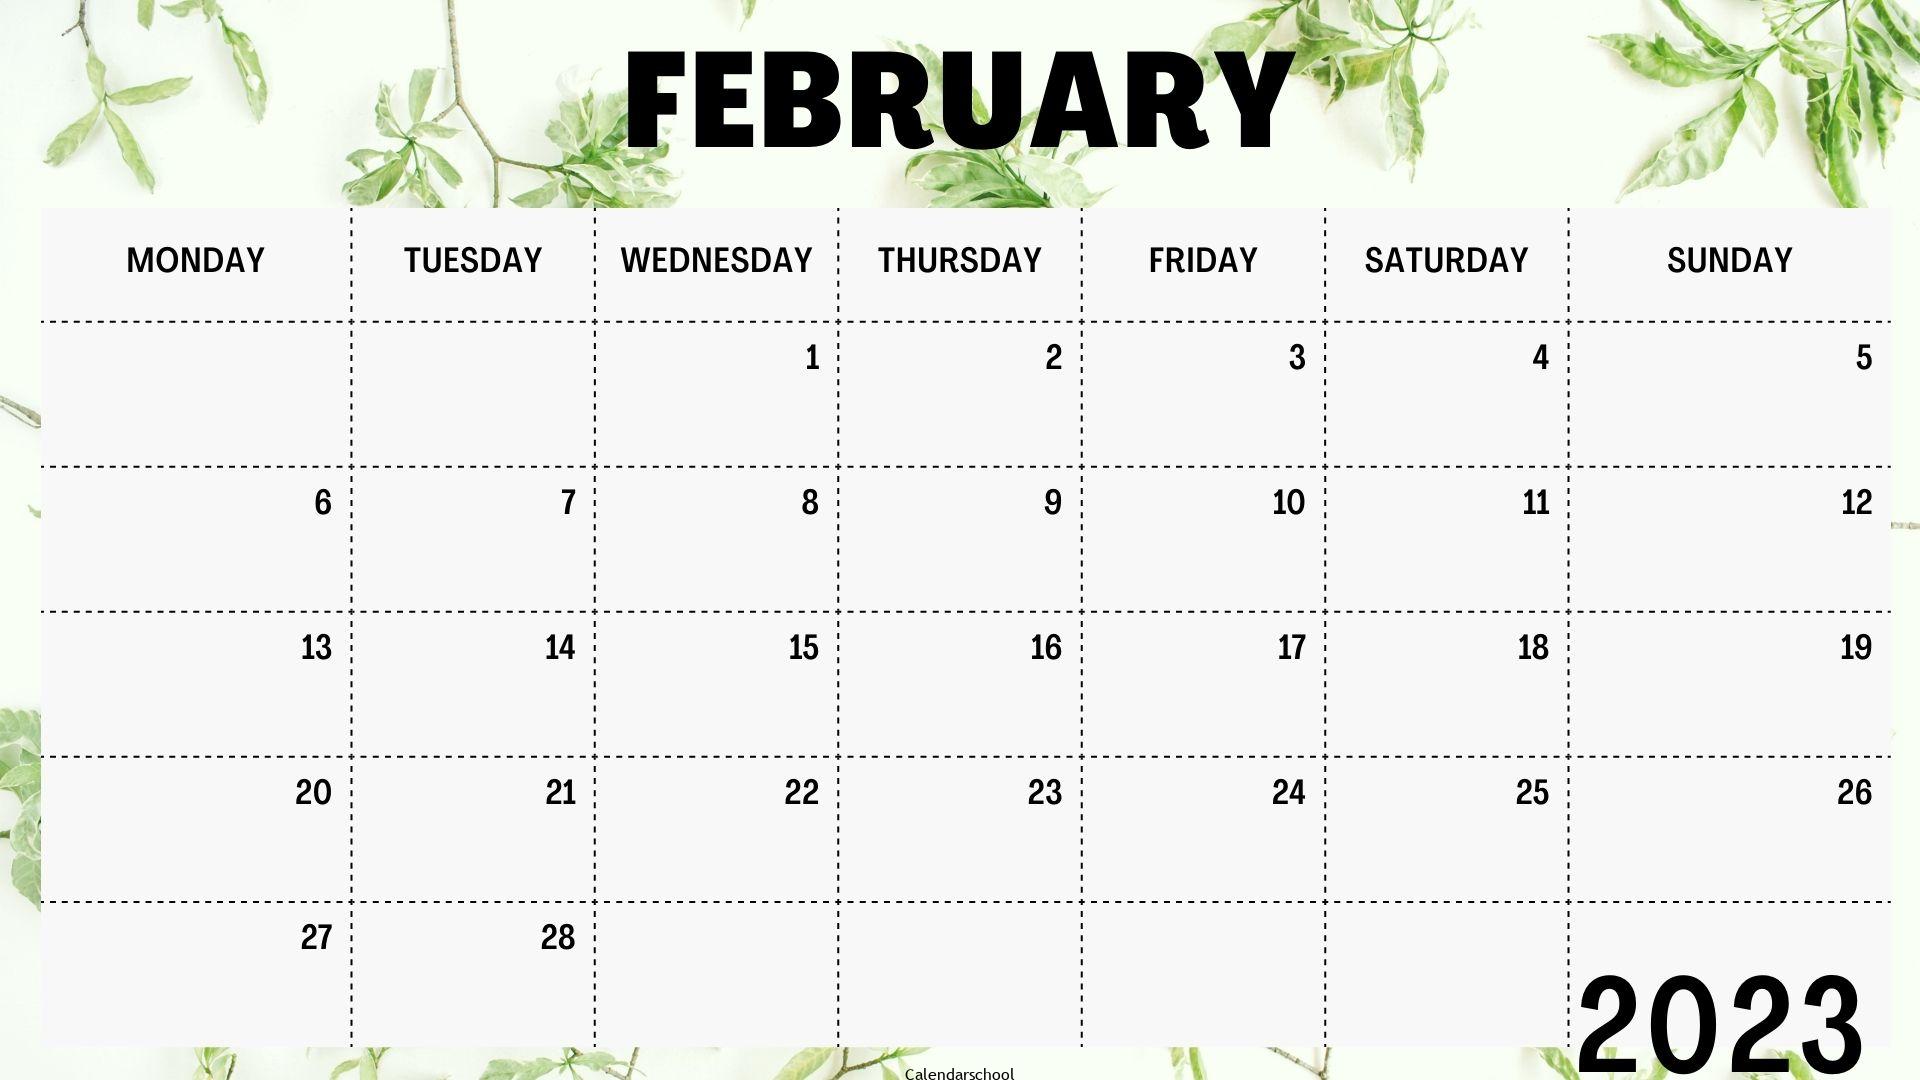 February Calendar 2023 Free